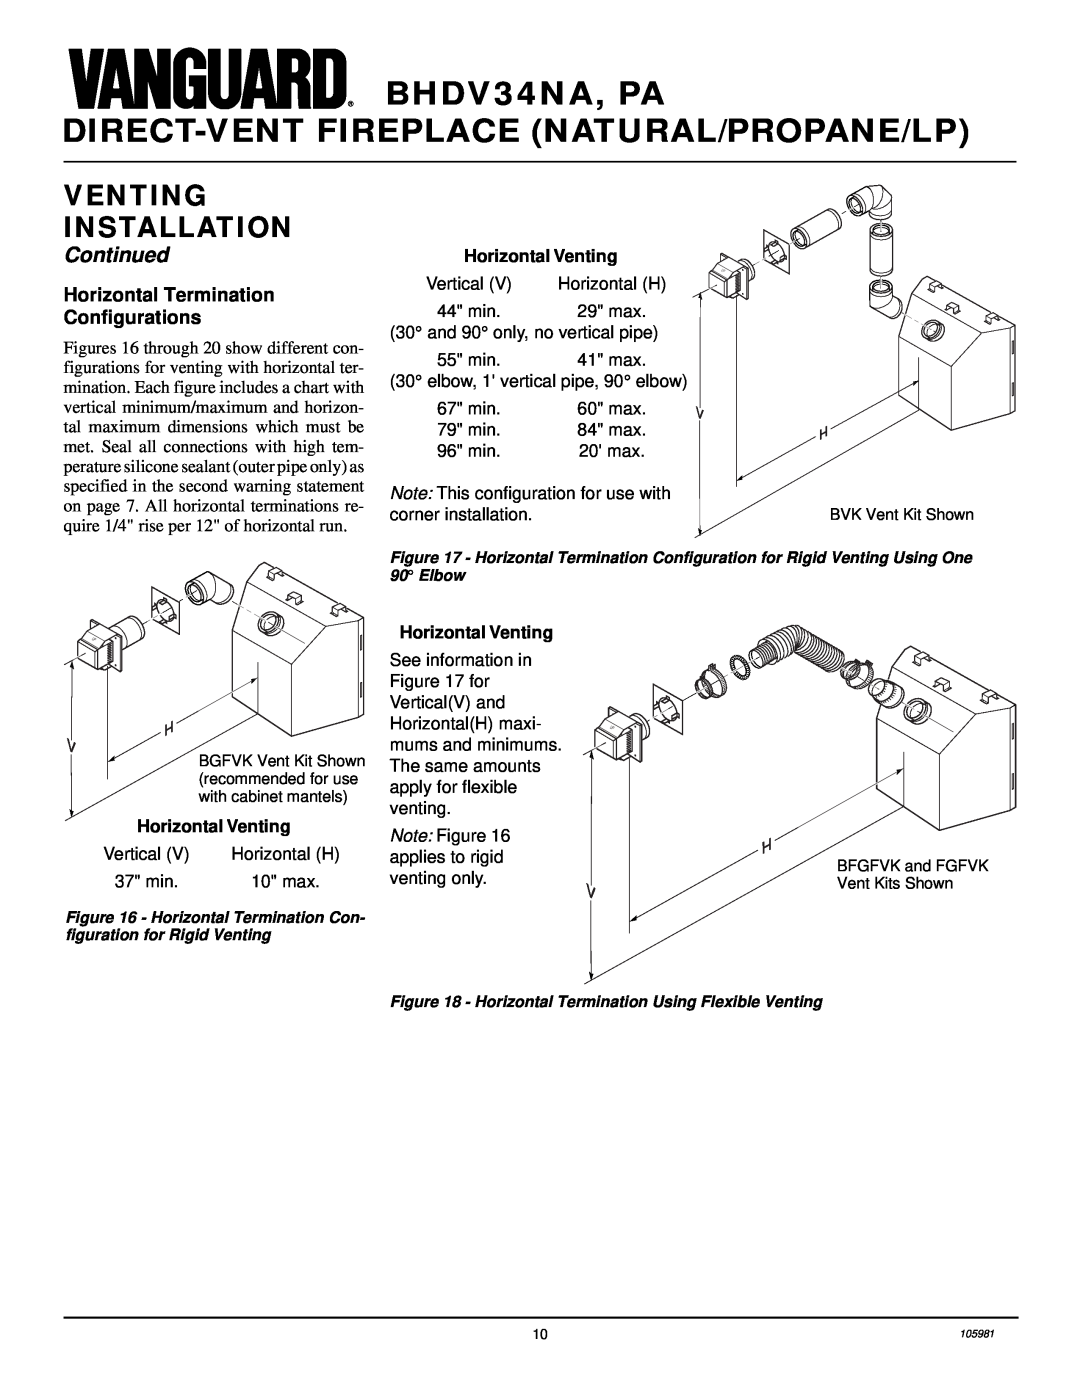 Desa Horizontal Termination Configurations, BHDV34NA, PA, Direct-Ventfireplace Natural/Propane/Lp, Venting Installation 